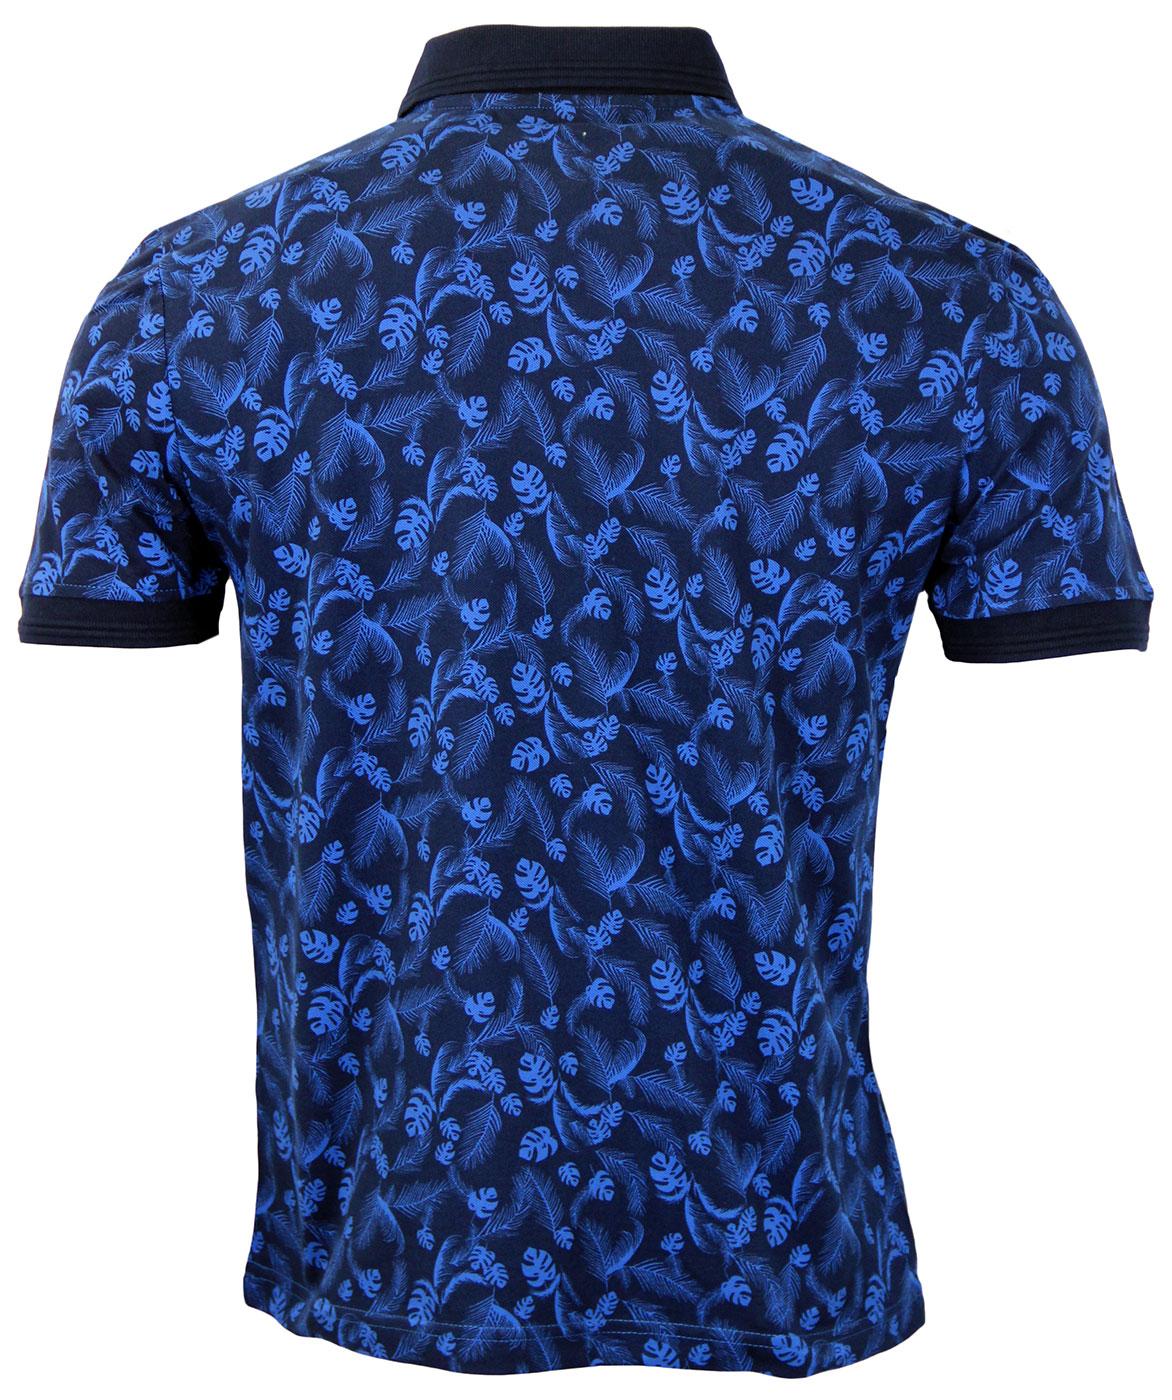 ORIGINAL PENGUIN Juntas Leaf Pattern Retro Mod Polo Shirt in Blue